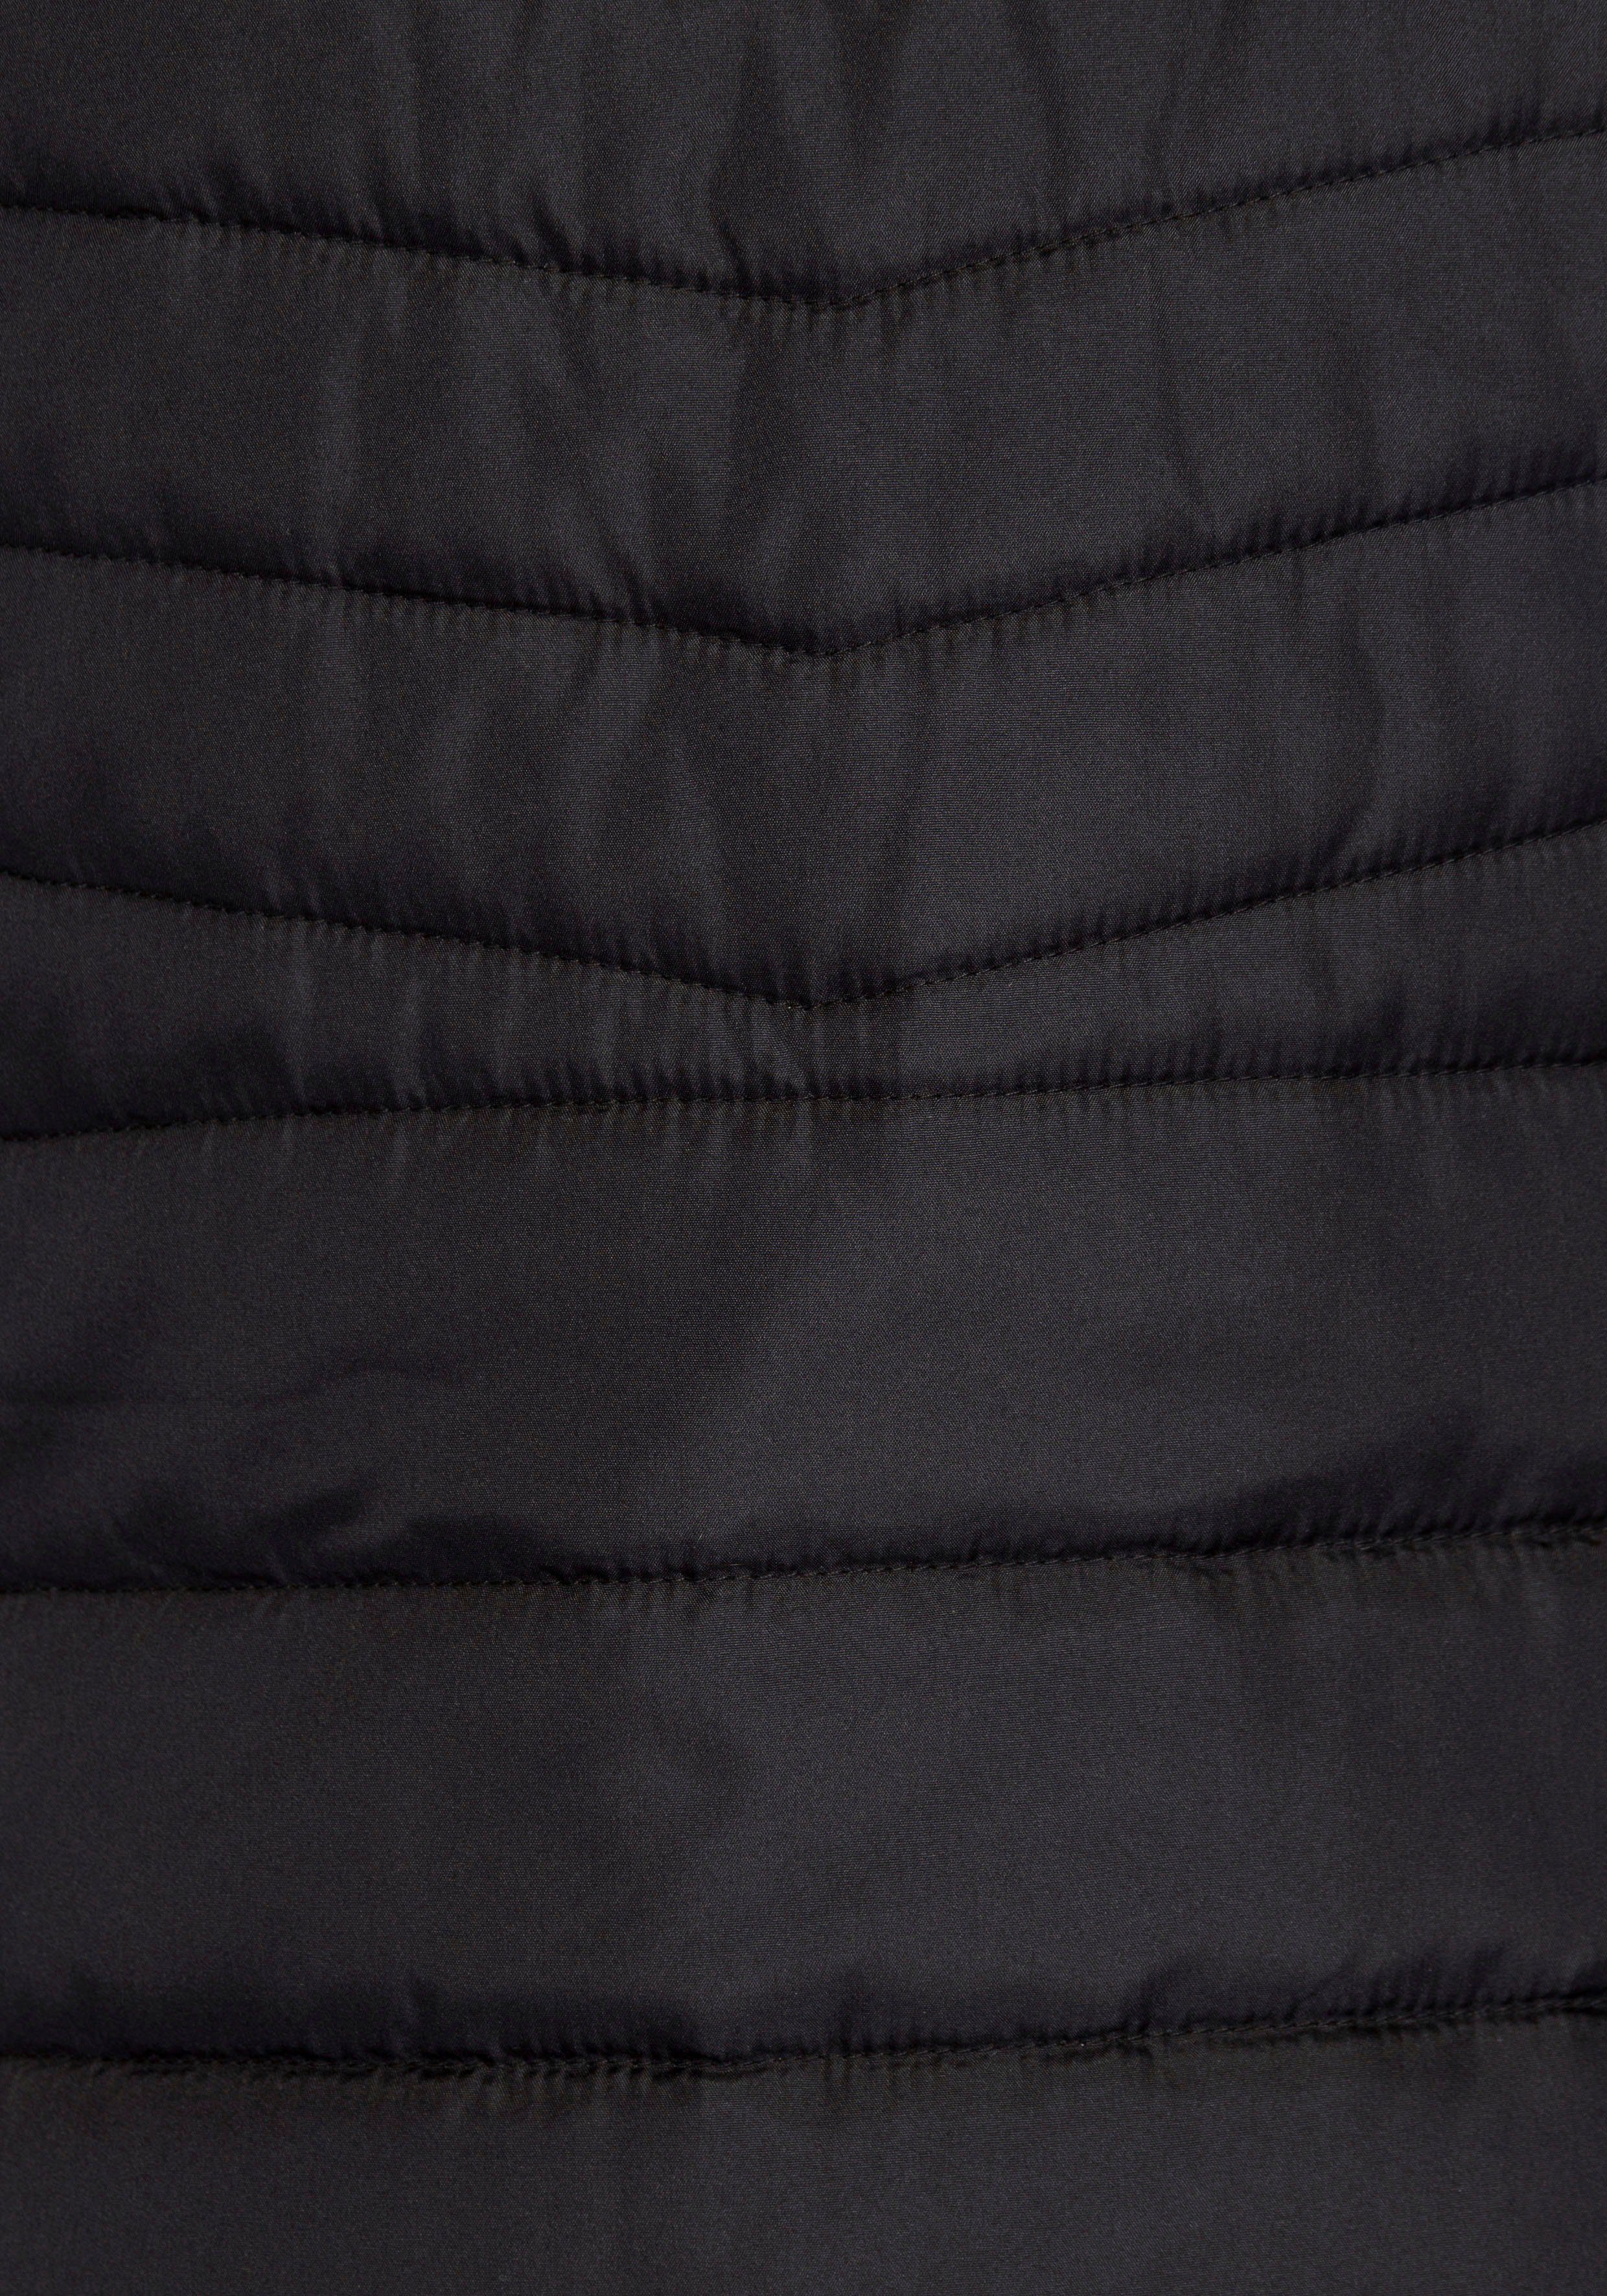 KangaROOS Langjacke im modischen Material) (Steppjacke schwarz nachhaltigem aus Materialmix